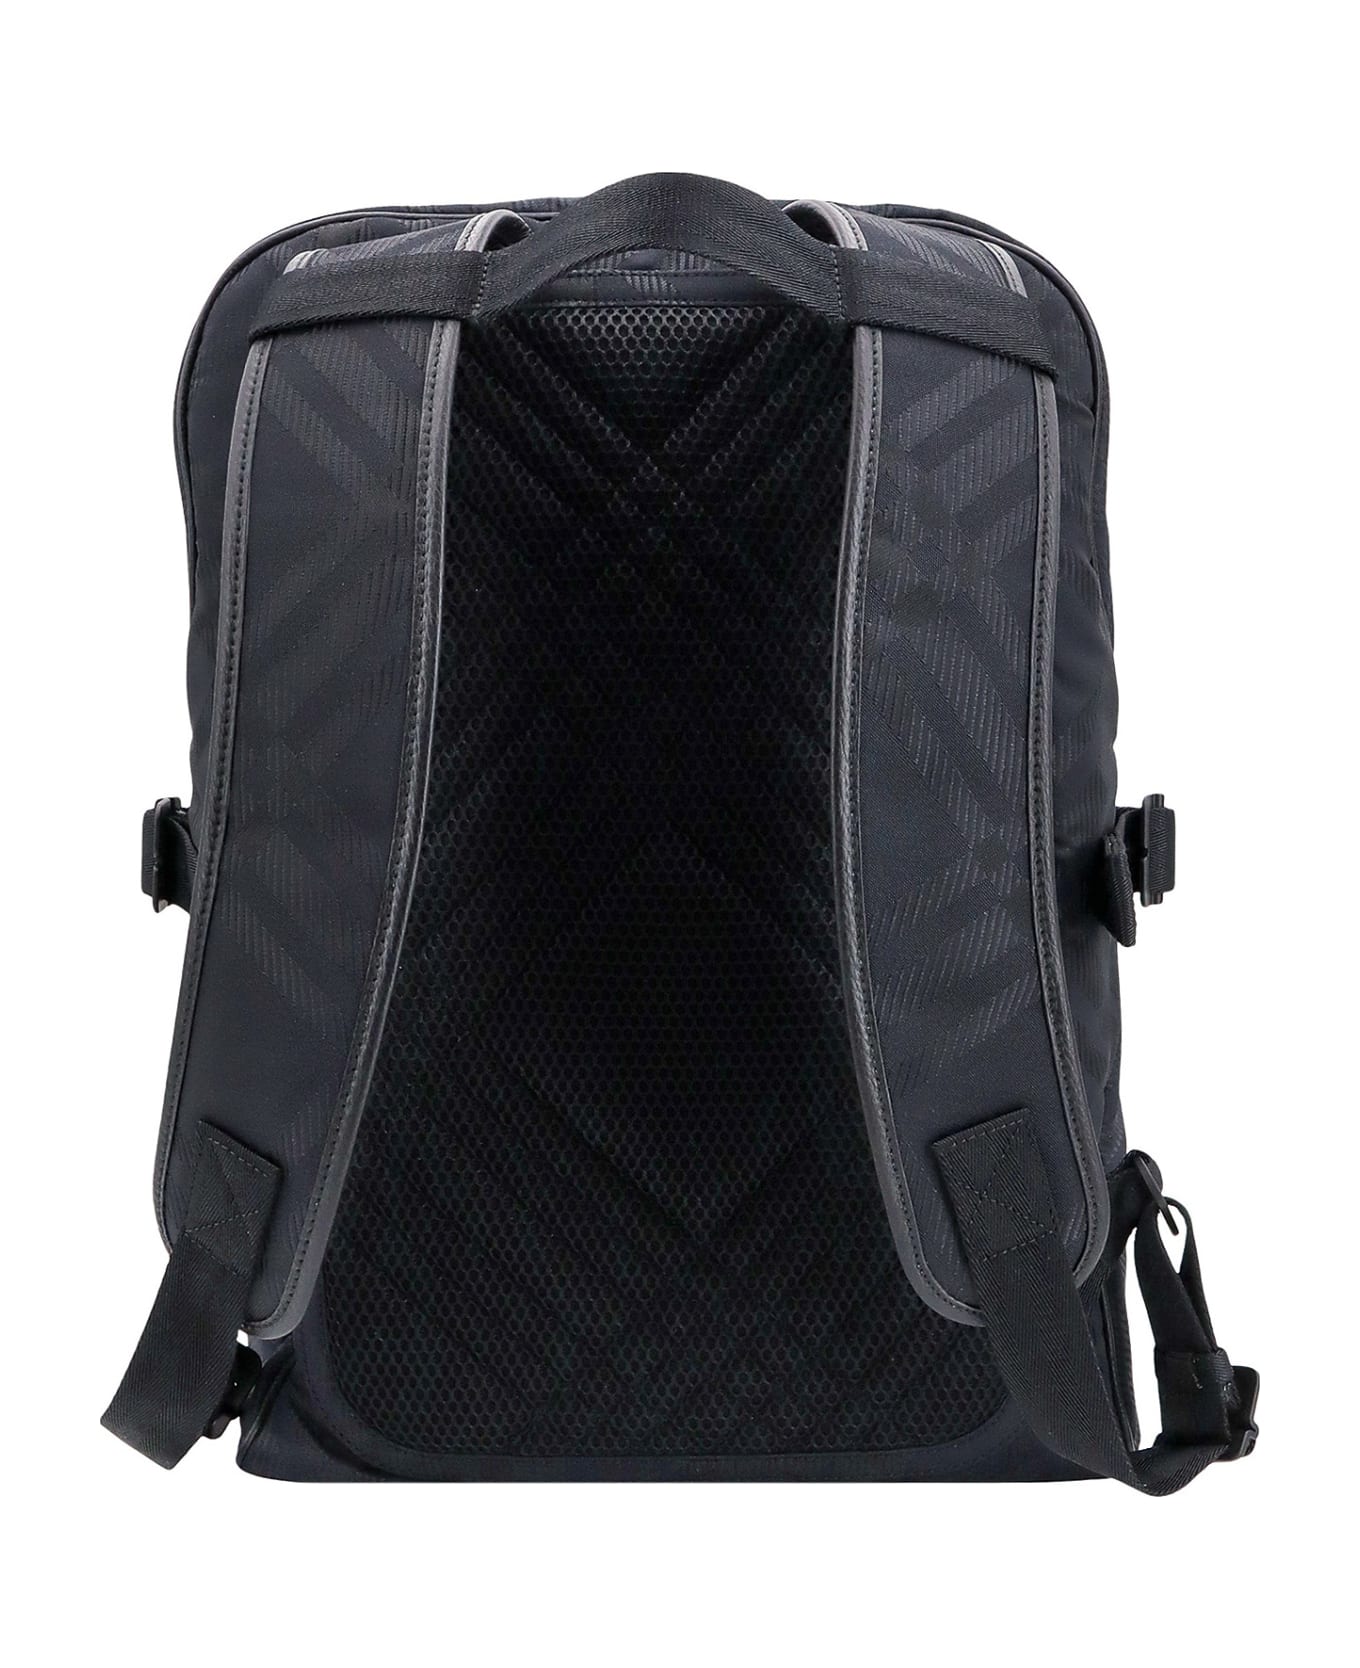 Burberry Backpack - Black バックパック